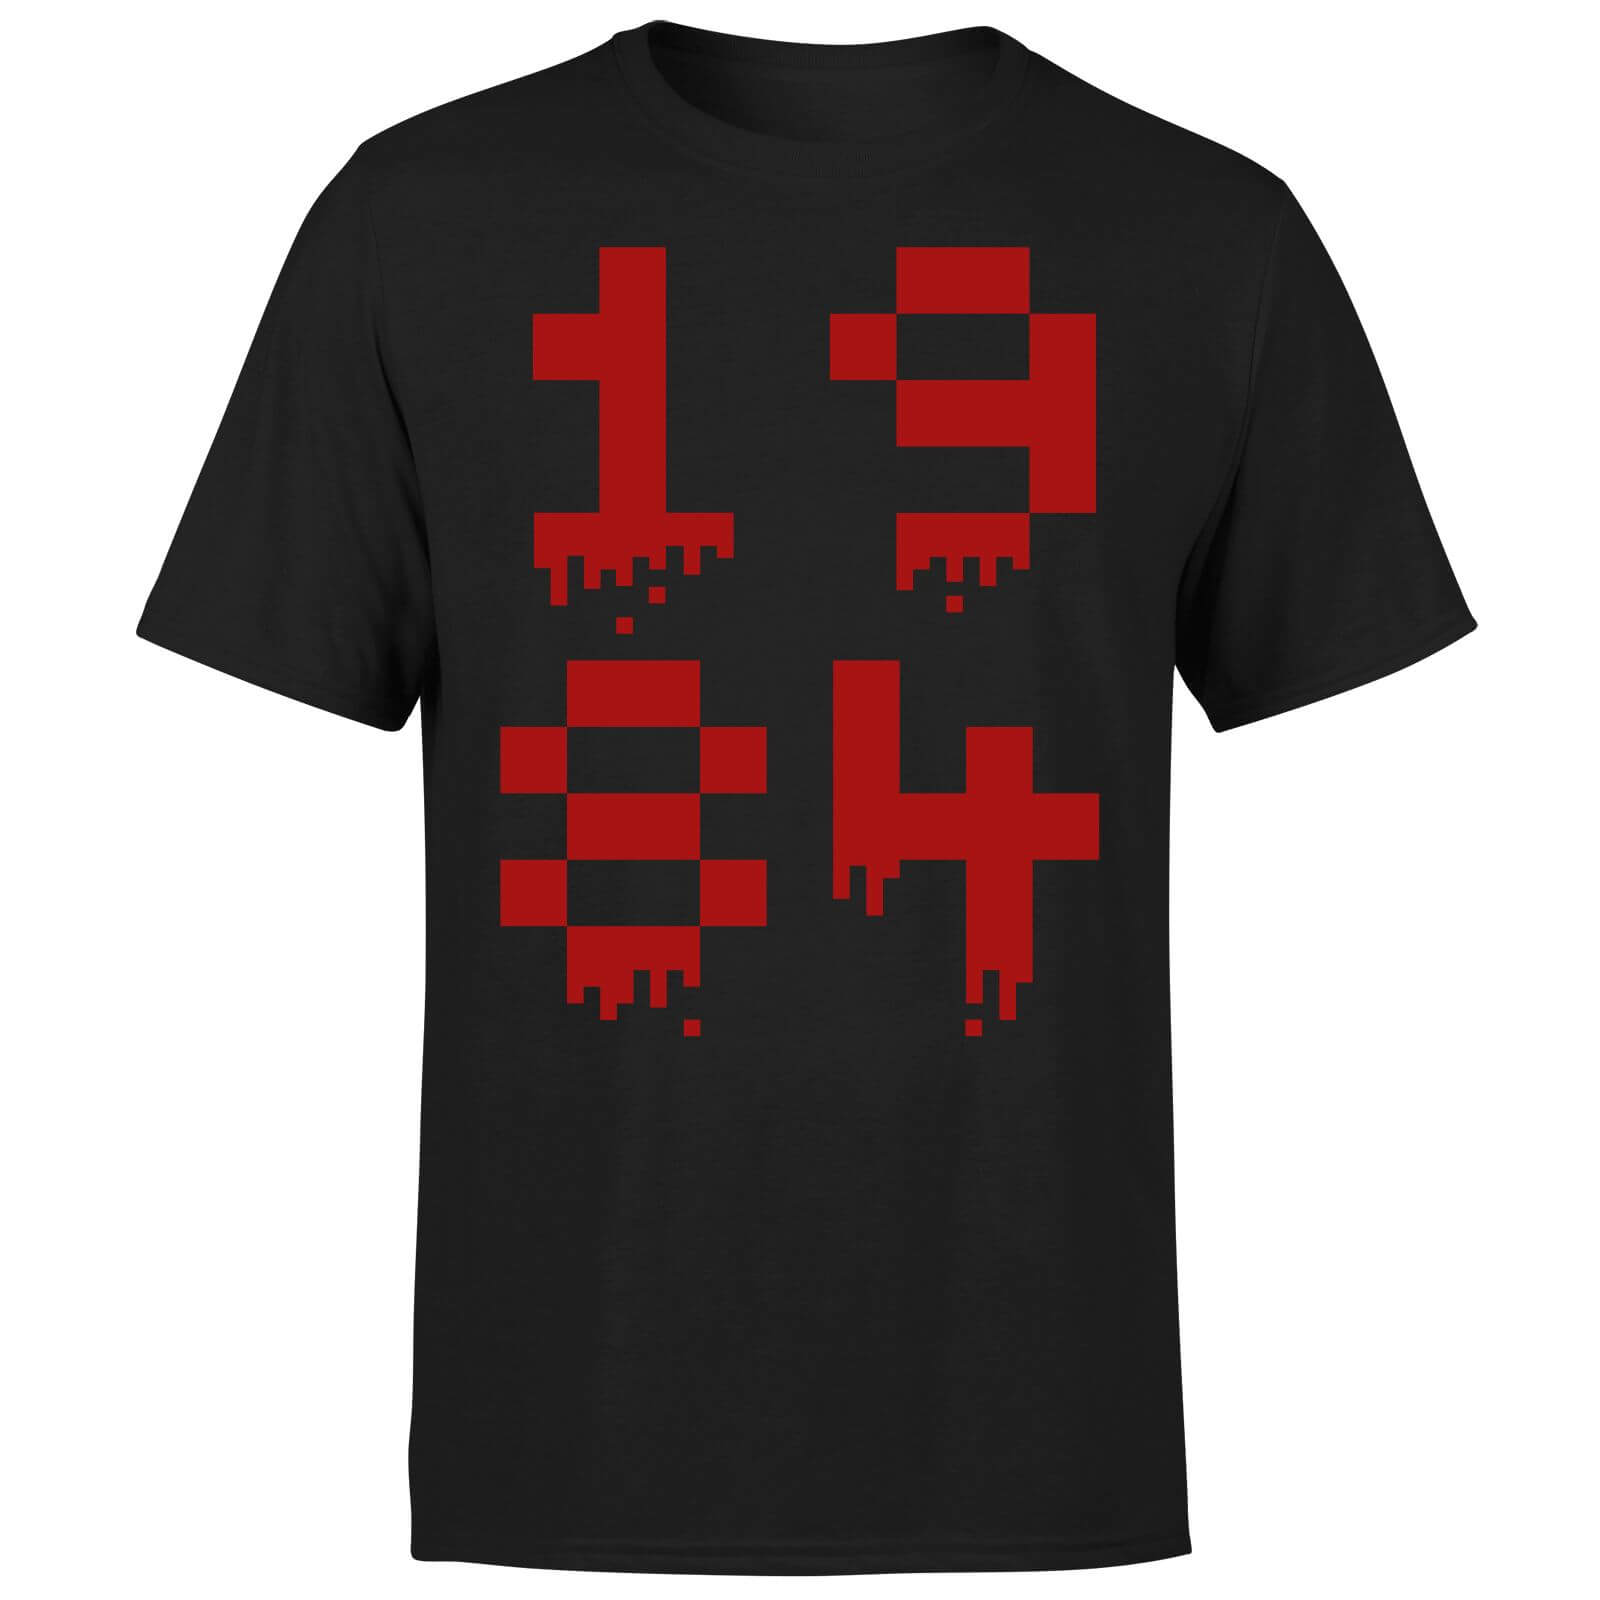 1984 Gaming T-Shirt - Black - M - Black